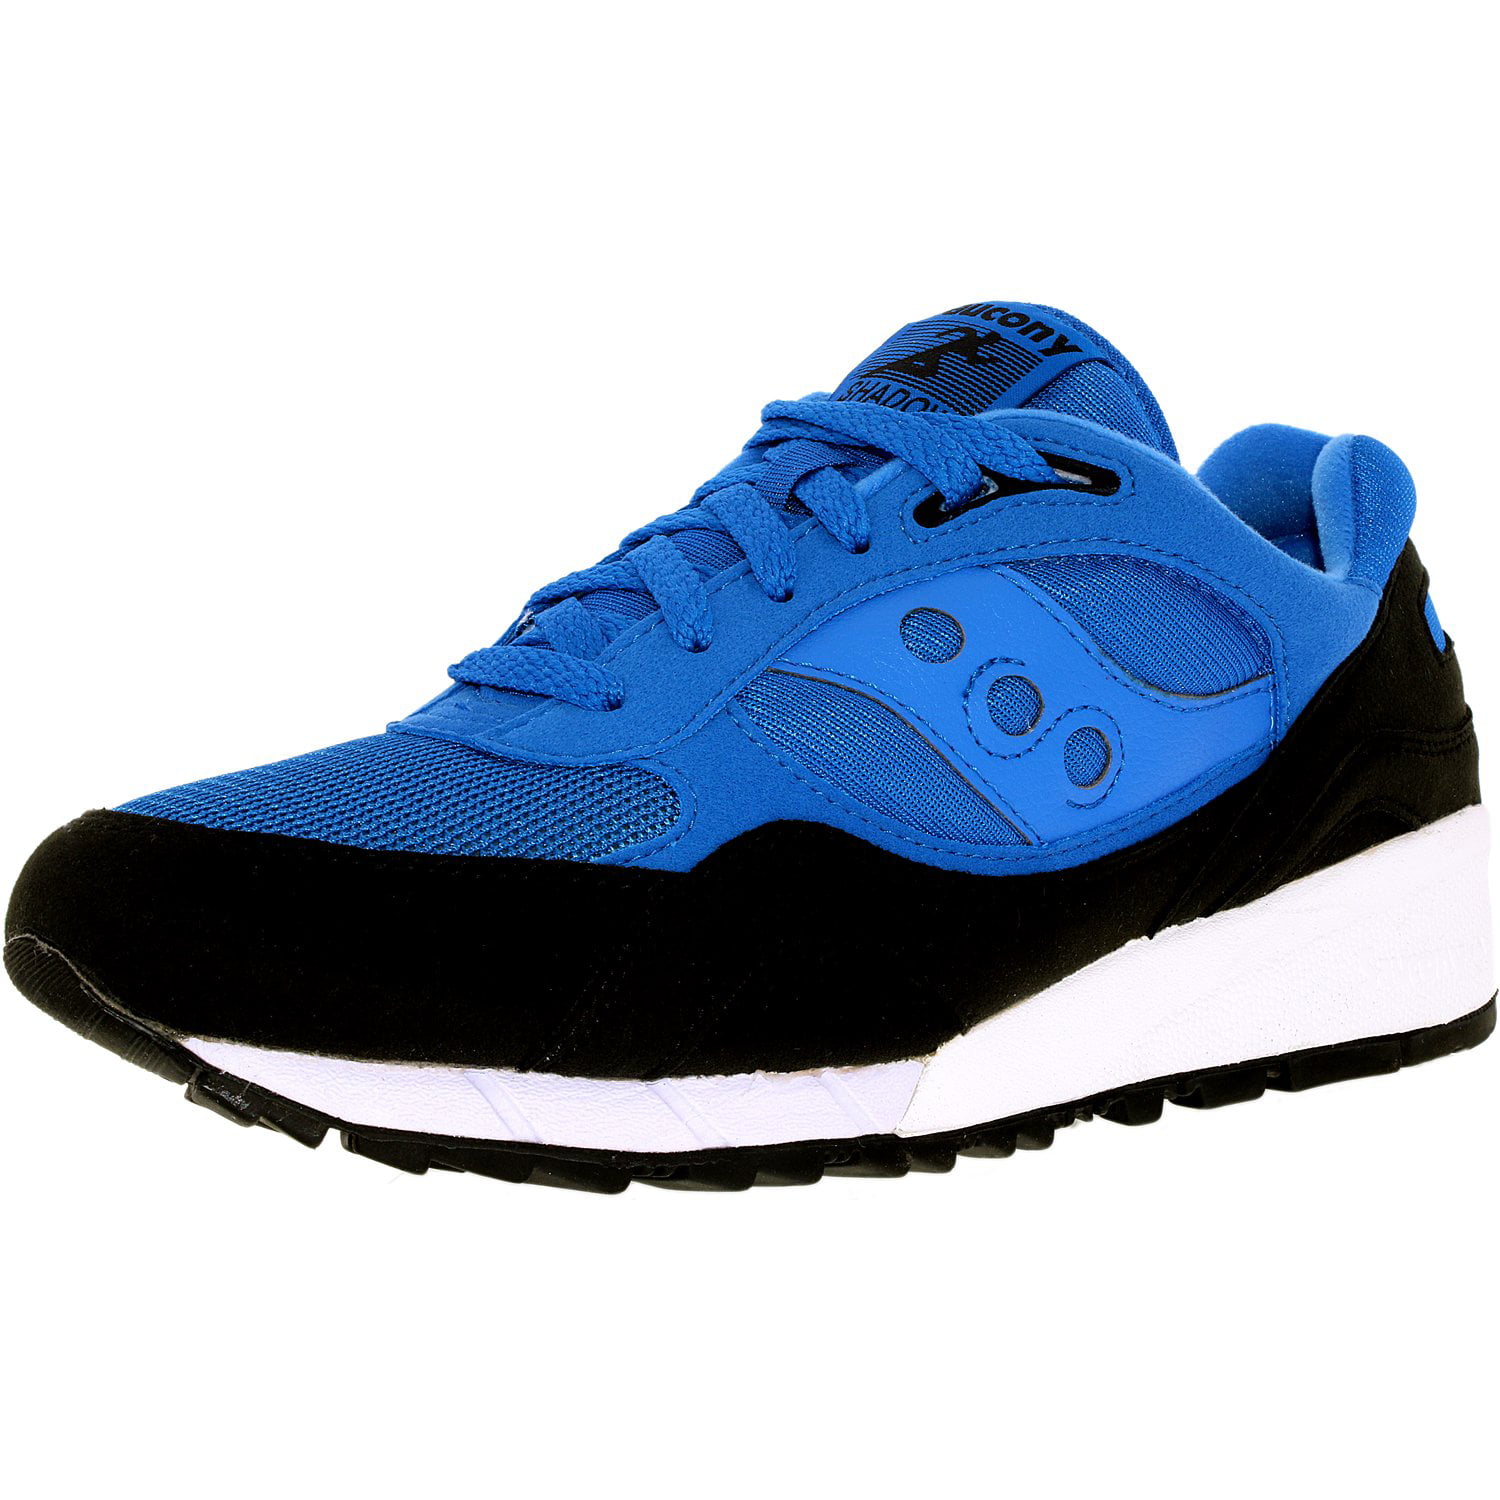 Saucony Men's Shadow 6000 Blue/Black Ankle-High Fashion Sneaker - 10M ...